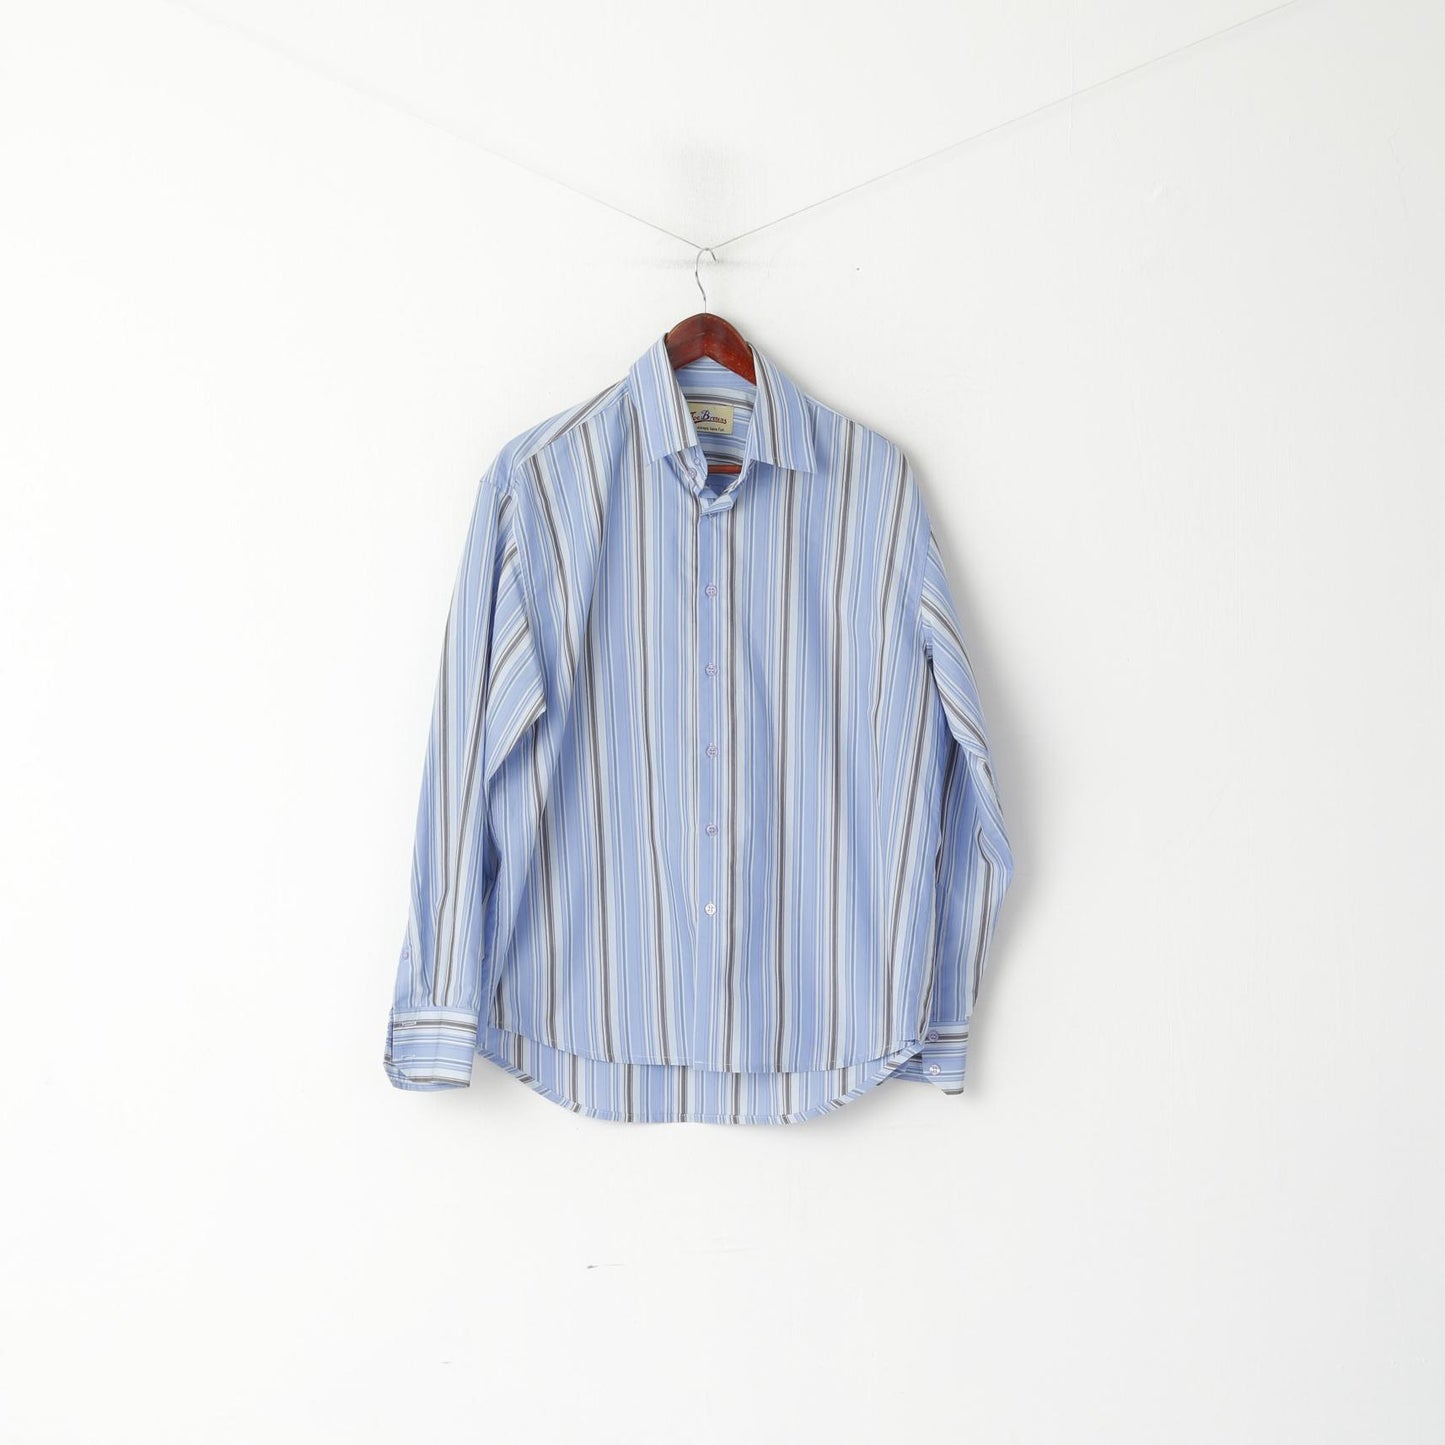 Joe Browns Men L Casual Shirt Blue Striped Cotton Long Sleeve Classic Top